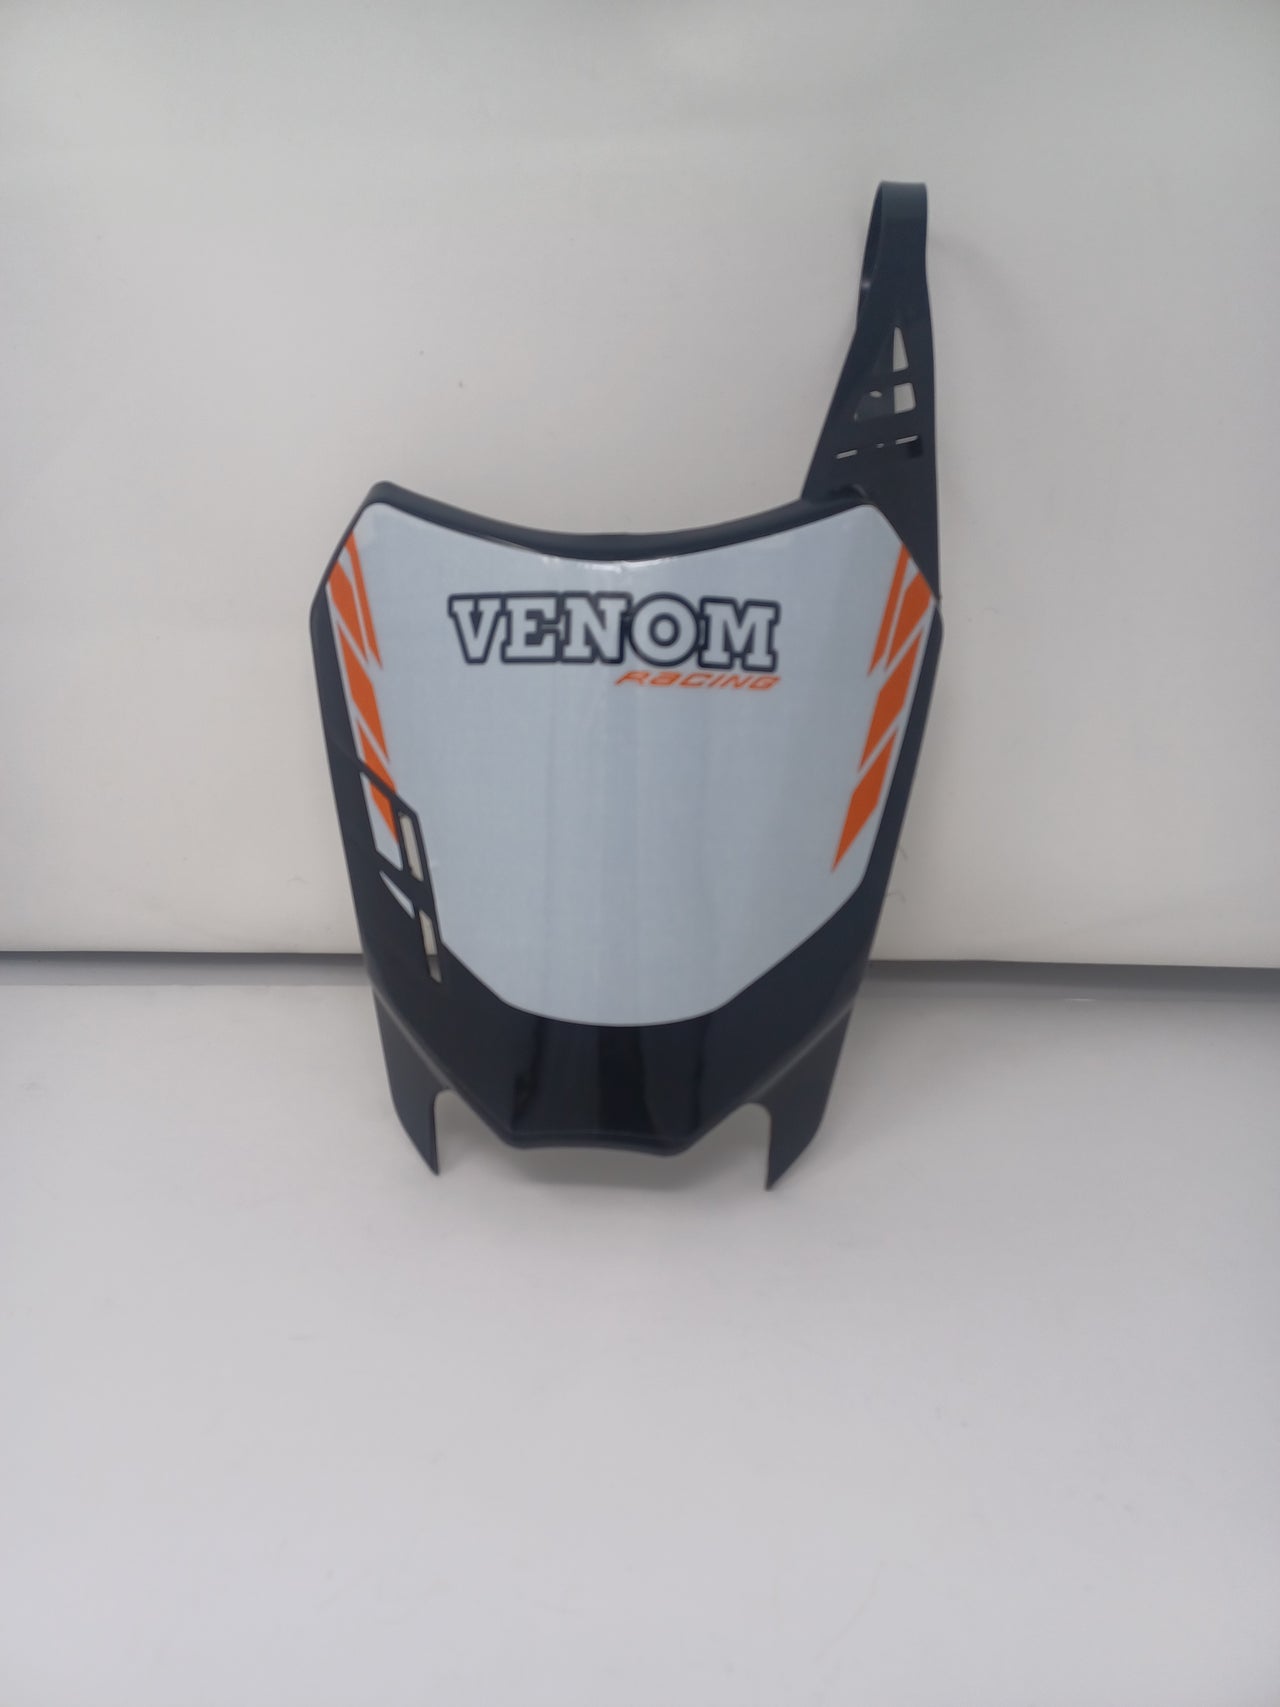 Venom Thunder 125cc Dirt Bike - Number plate 304013022002